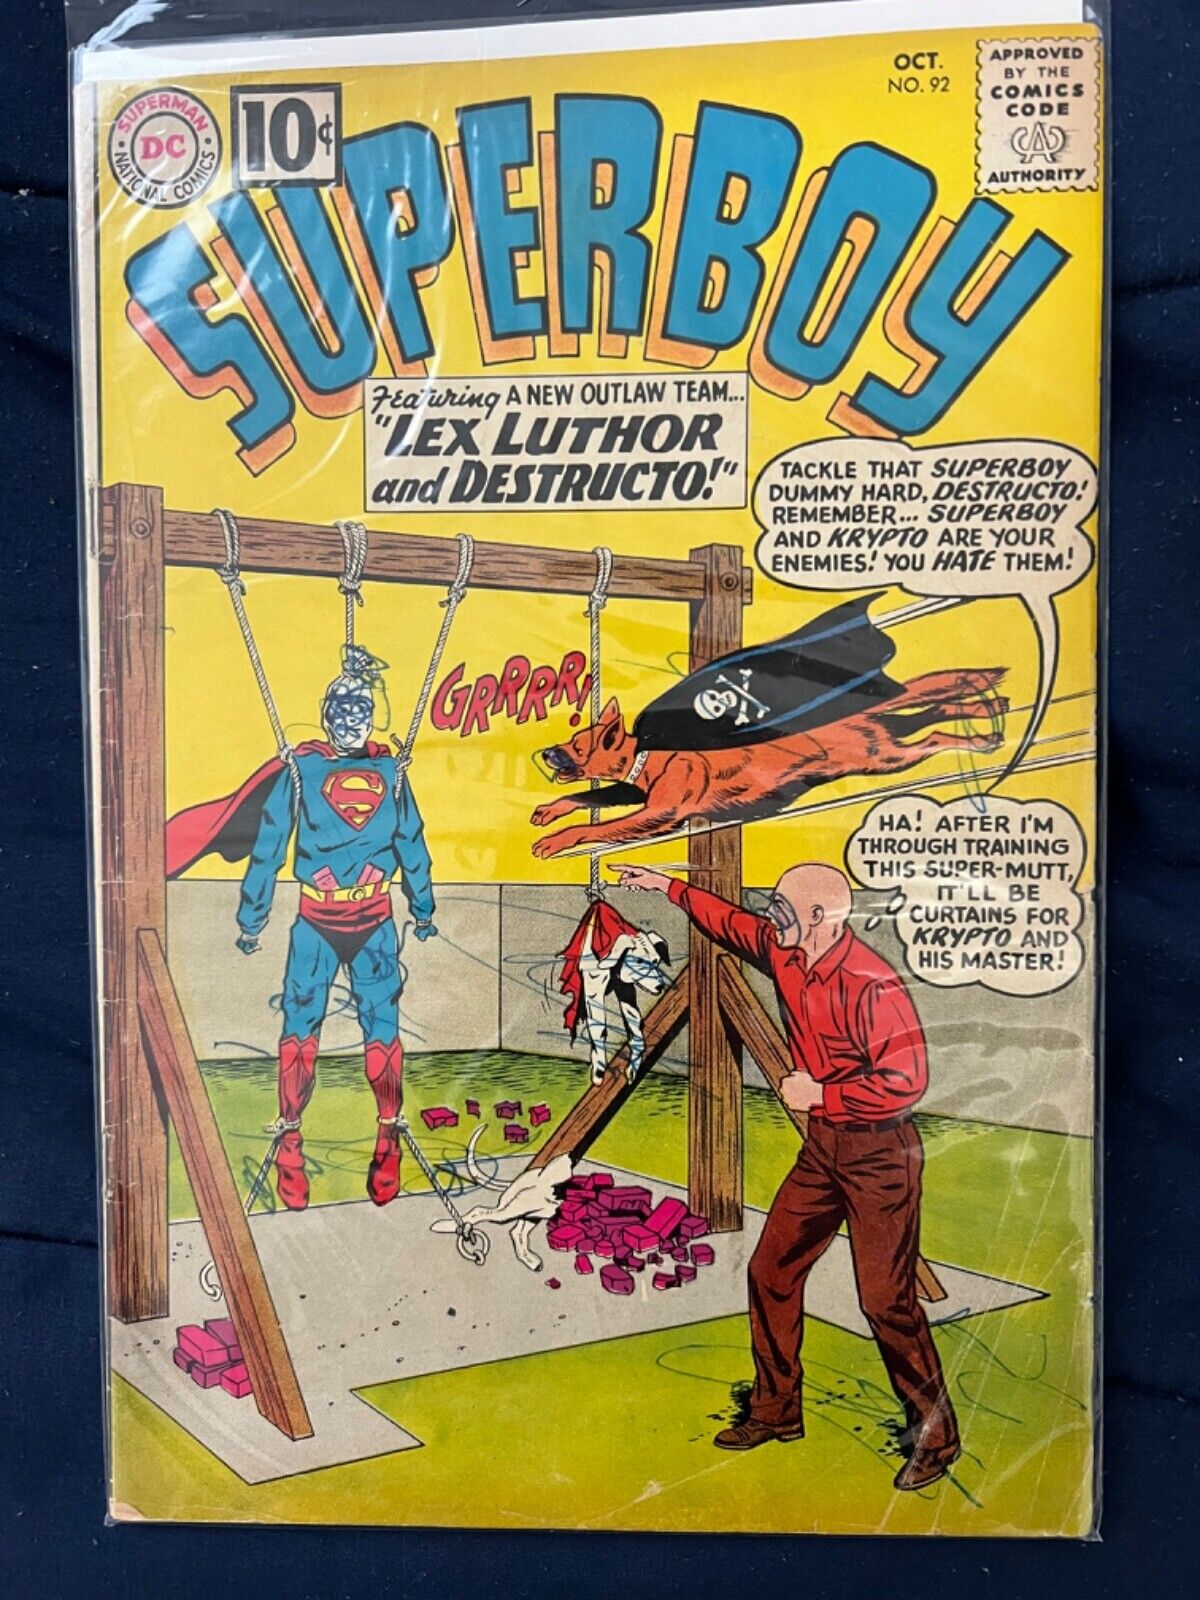 SUPERBOY #92 1961 Lex Luthor and Destructo 10 cent cover